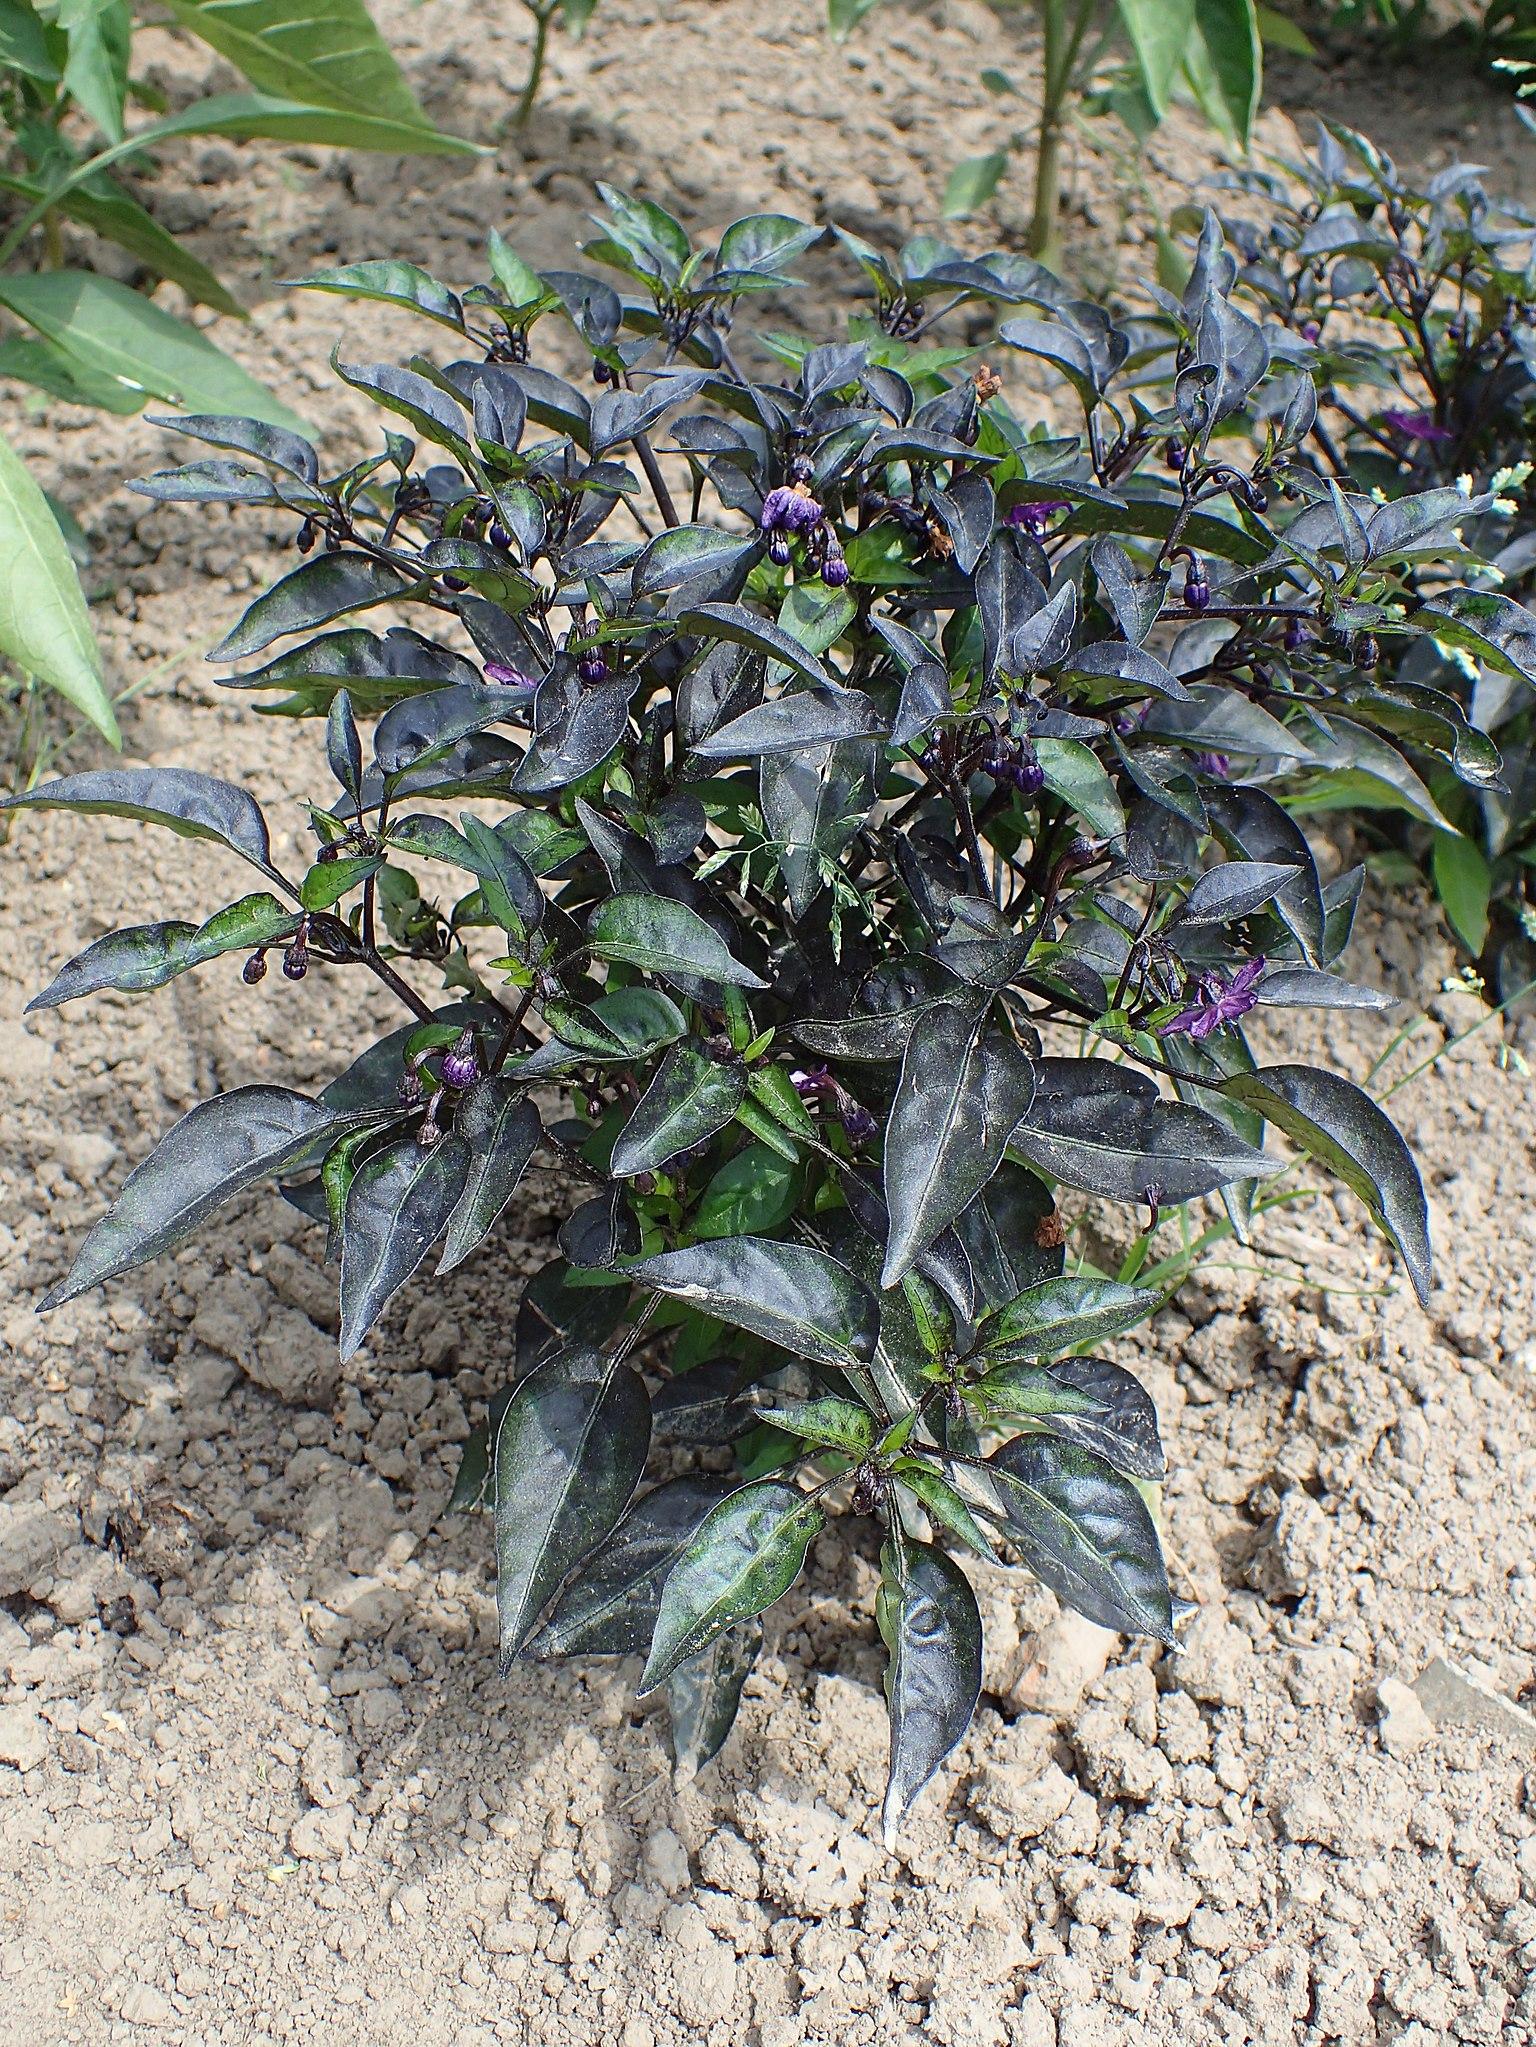 Dark-purple flowers with buds, Dark-green leaves and black stems.